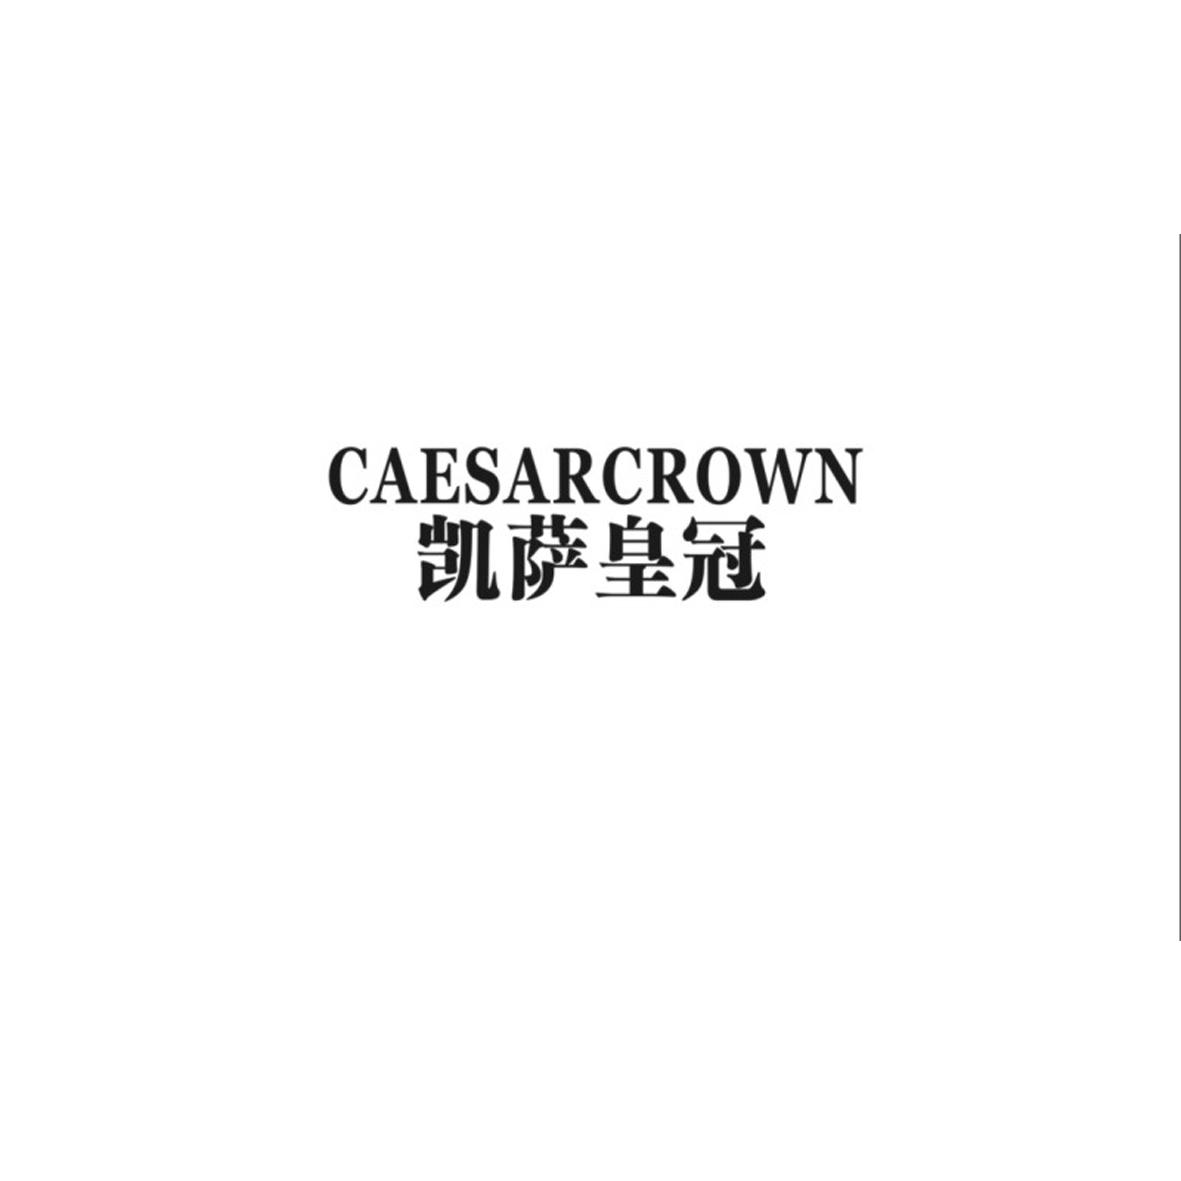 CAESARCROWN凯萨皇冠商标转让